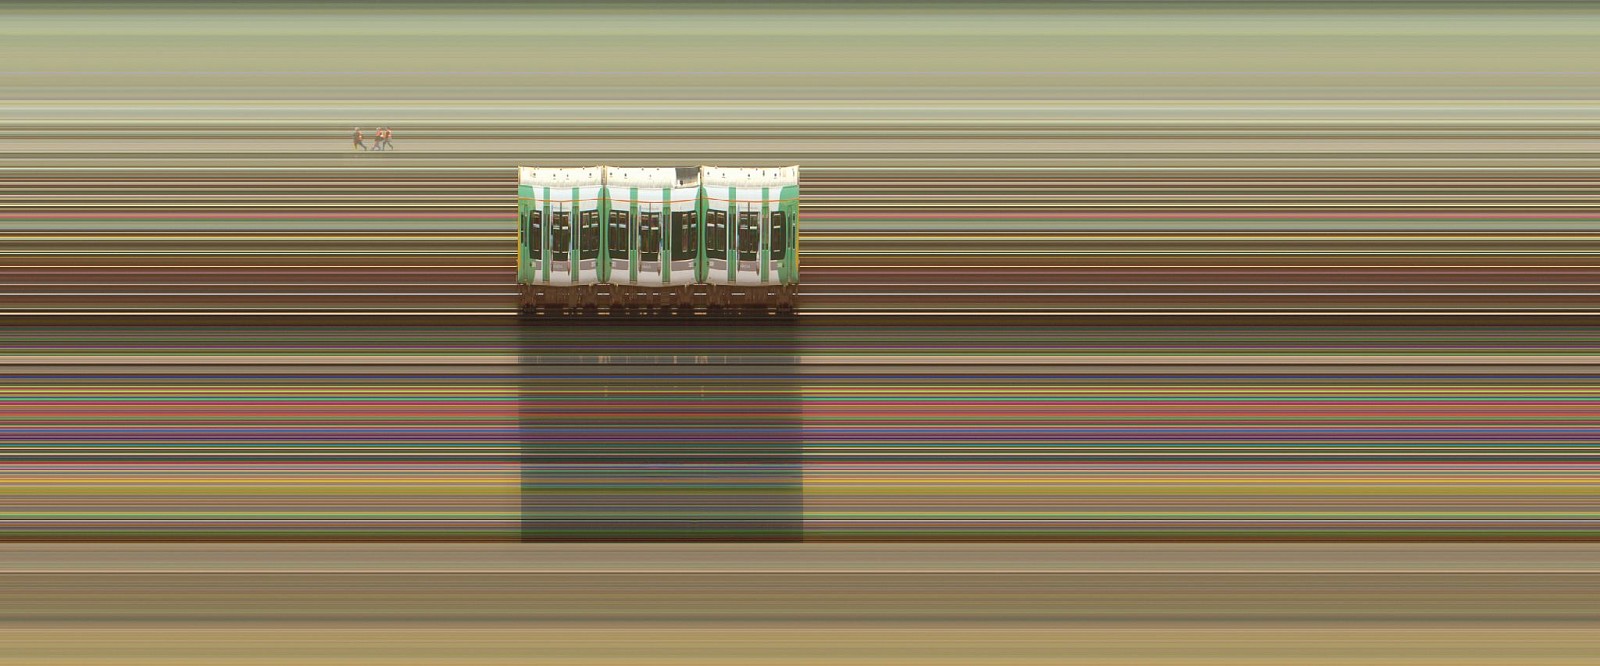 Jay Mark Johnson, BRIGHTON TRAINS #88, 2012 Australia
archival pigment on paper, mounted on aluminum, 40 x 96 in. (101.6 x 243.8 cm)